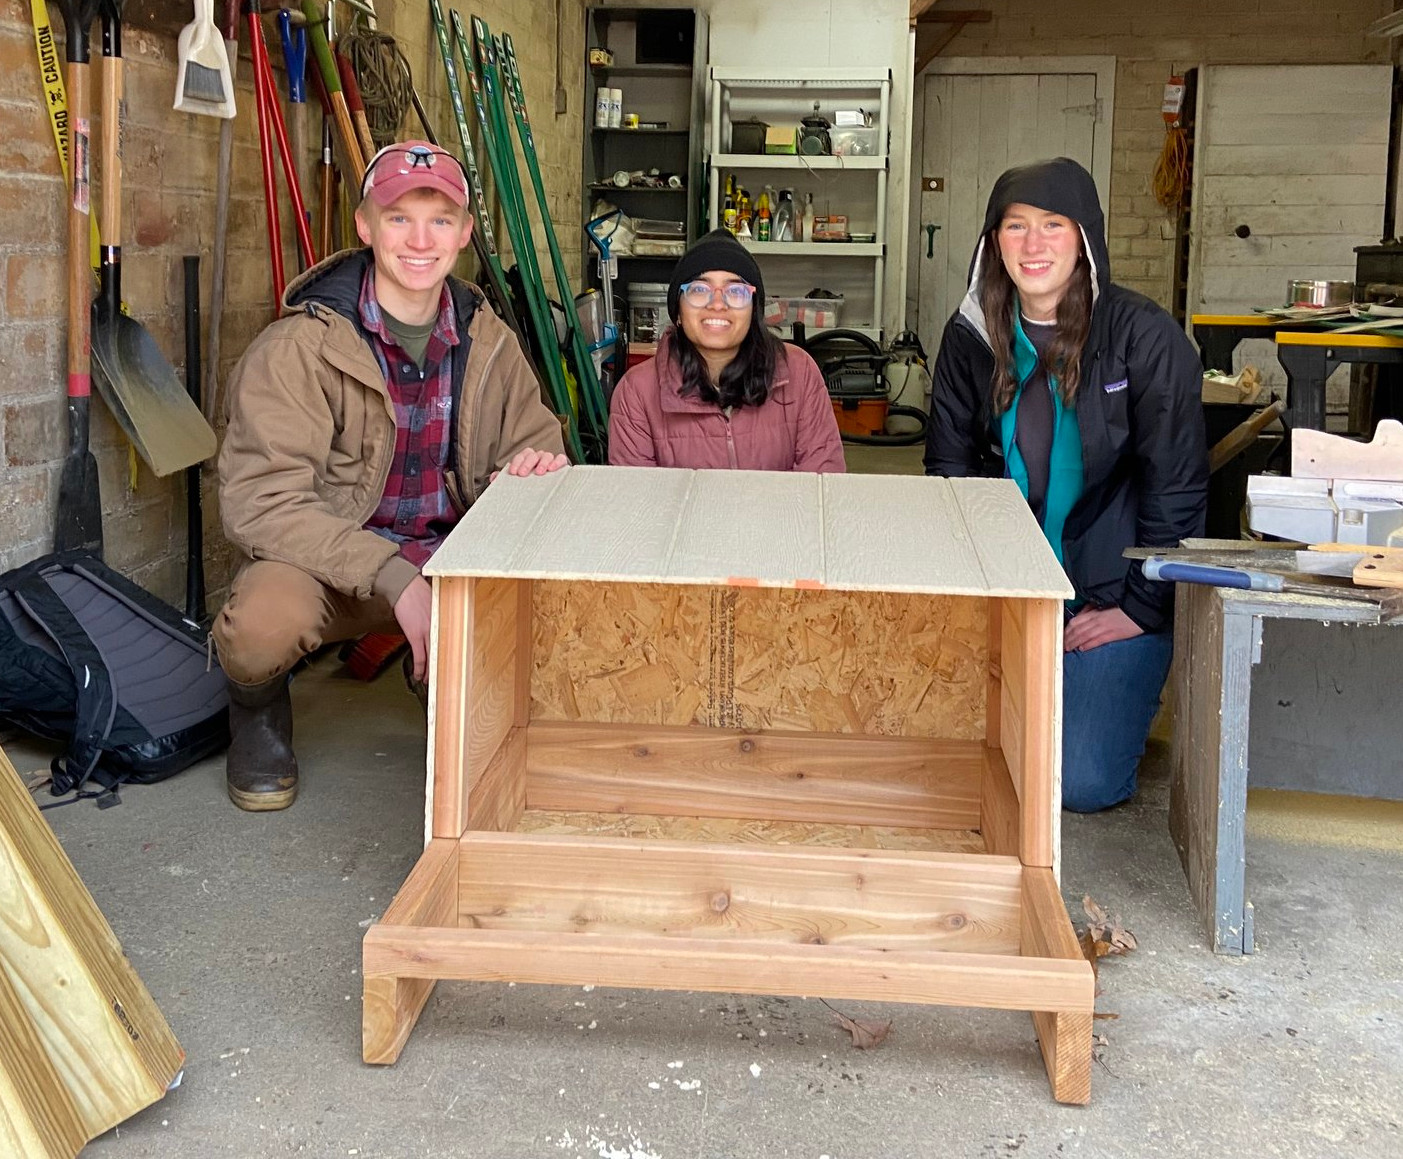 Three people kneel around a wood nest box in a workshop.